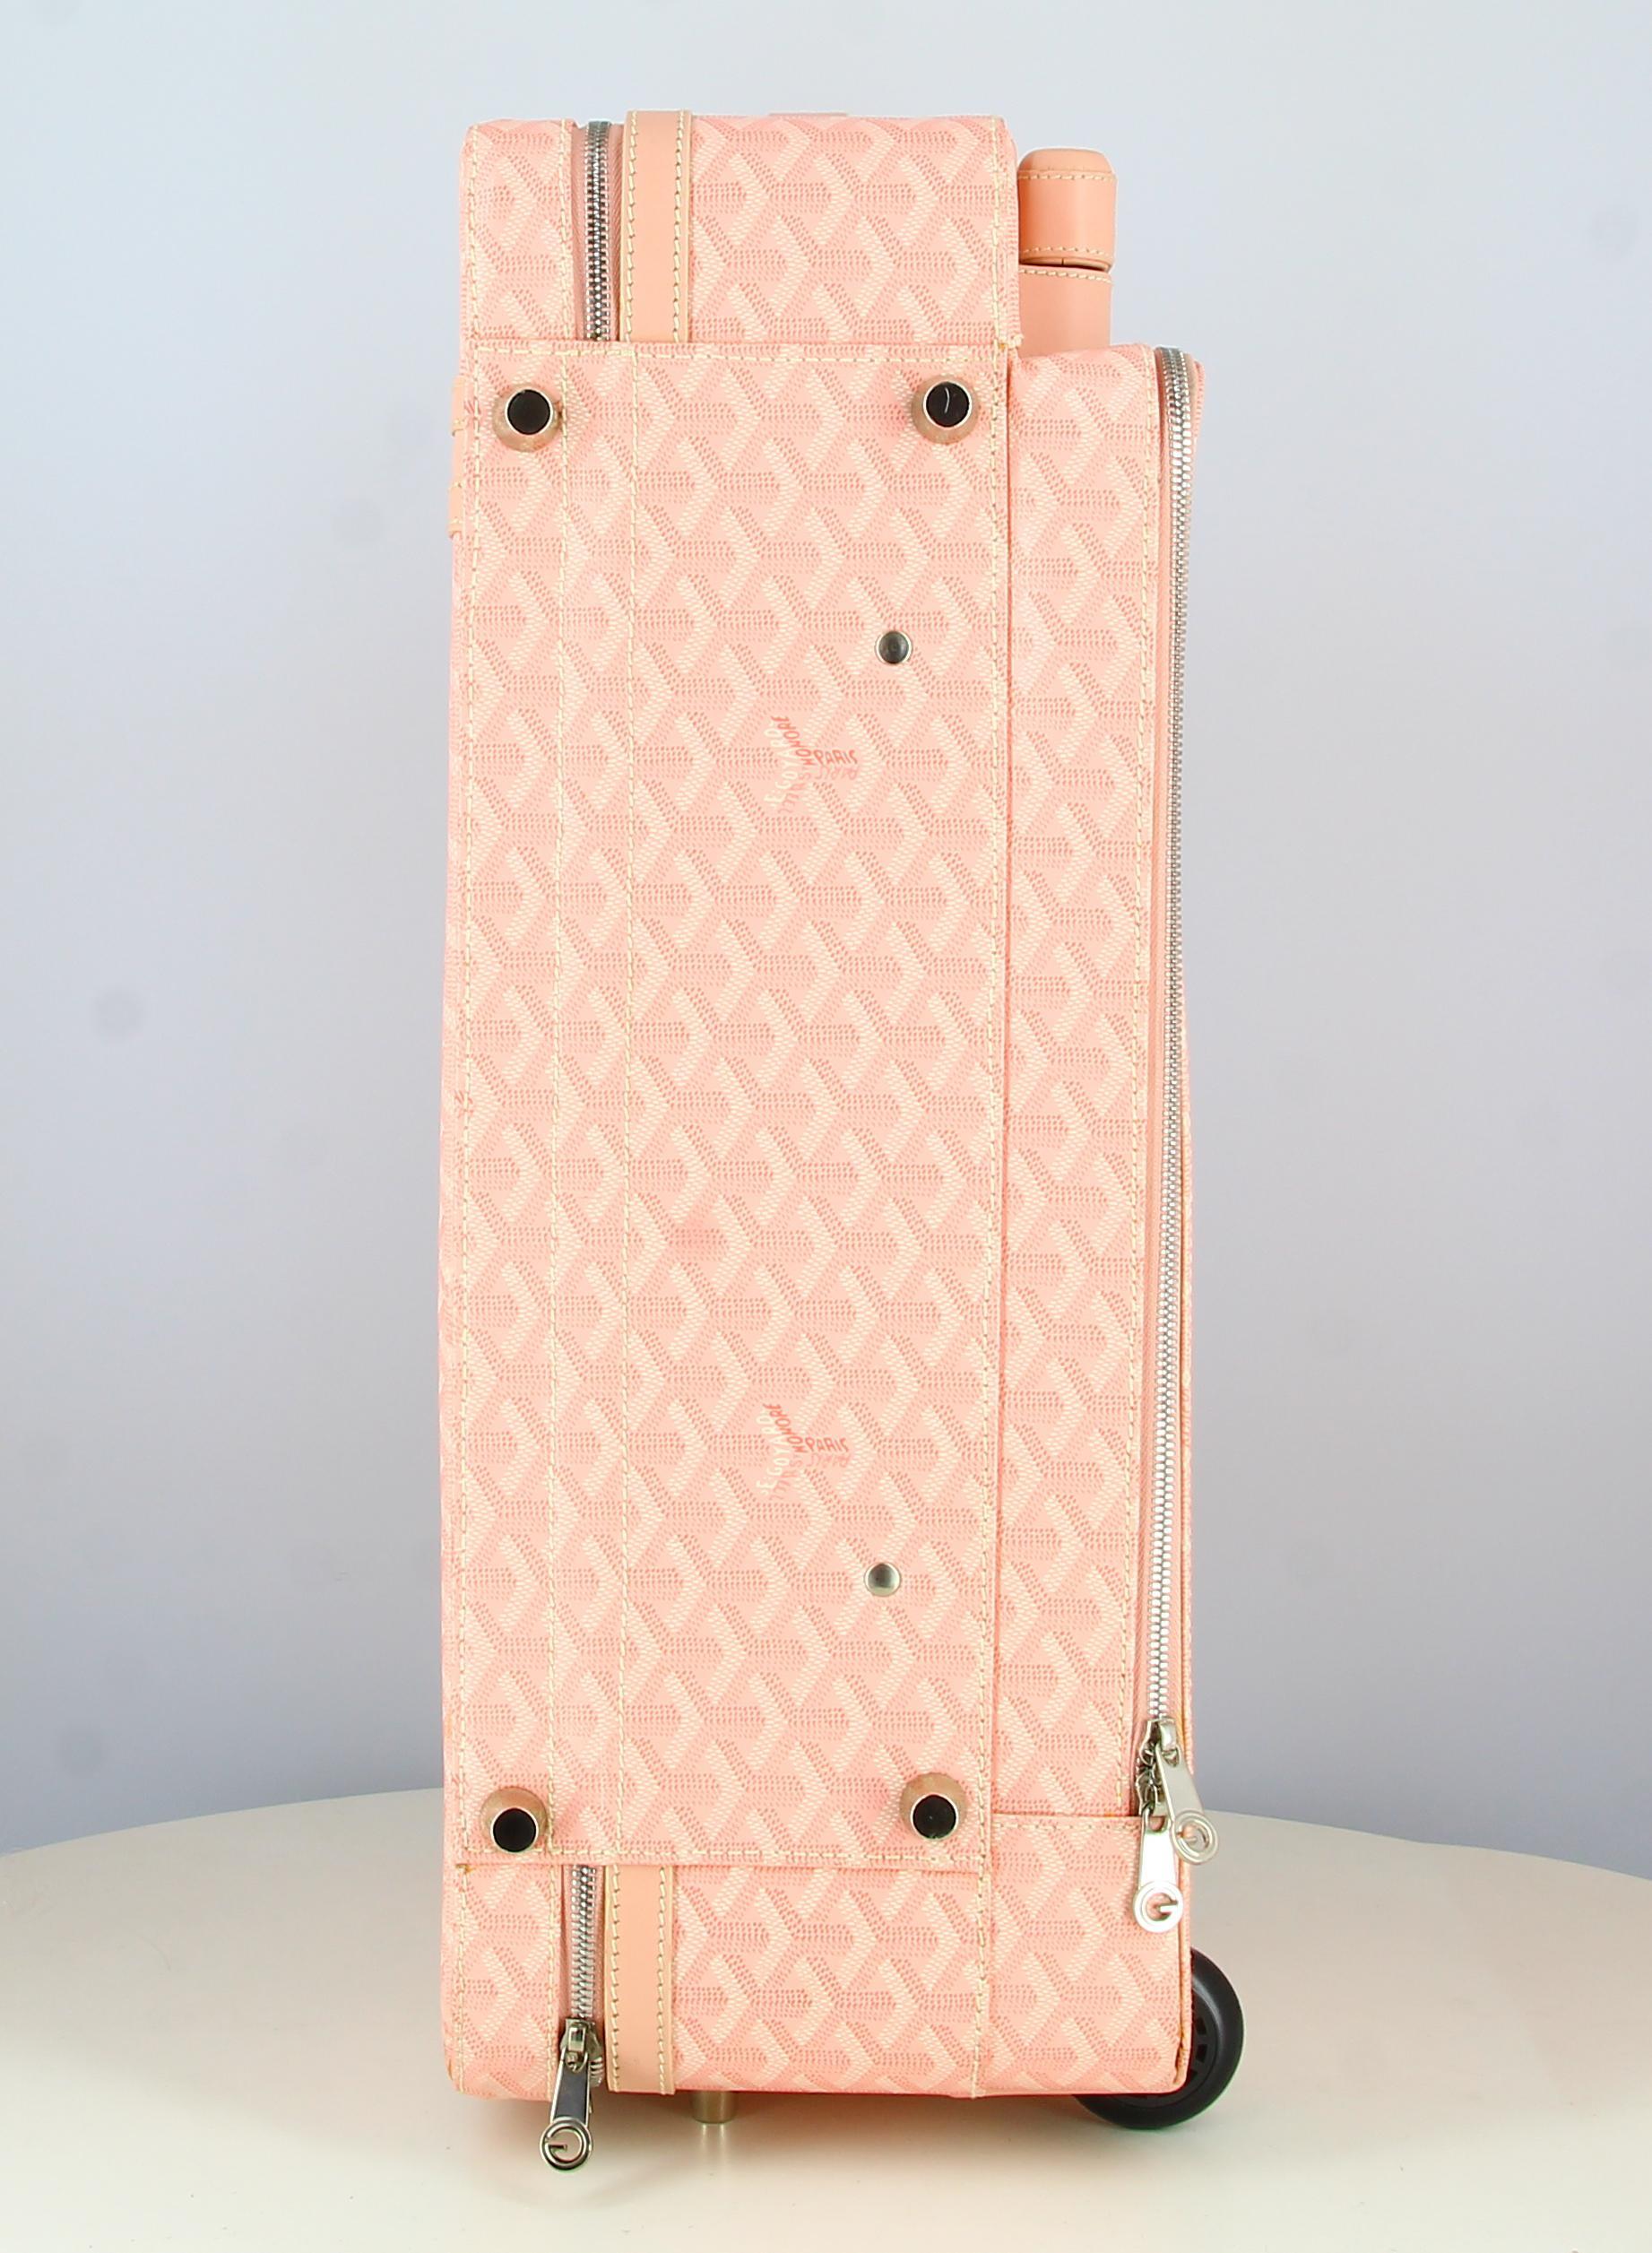 Women's or Men's Goyard Monogram Pink Suitcase with Ken profile For Sale